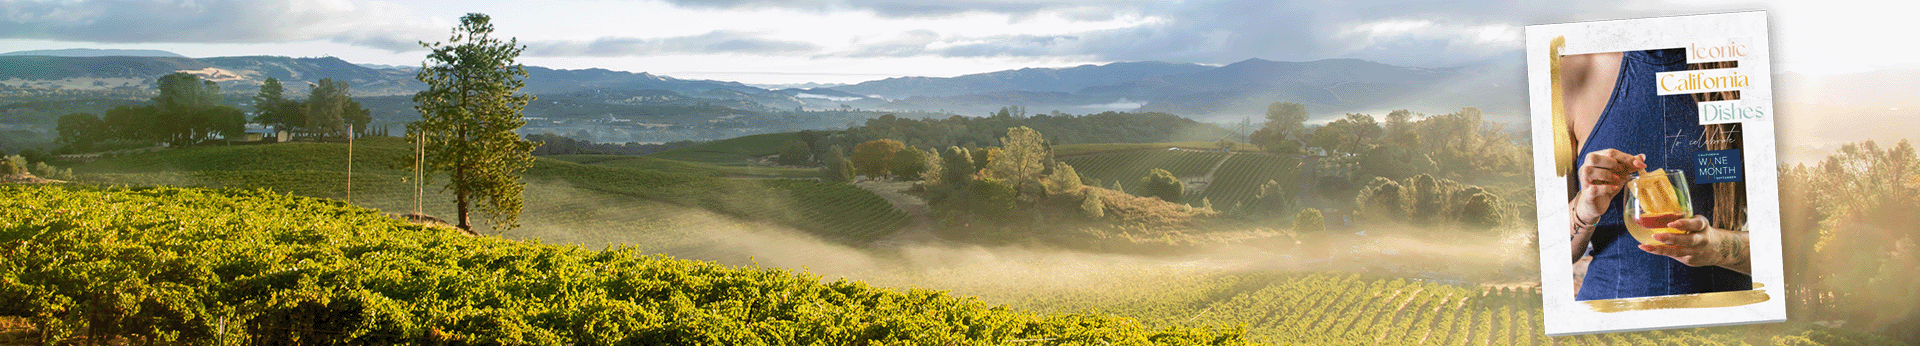 California Winery